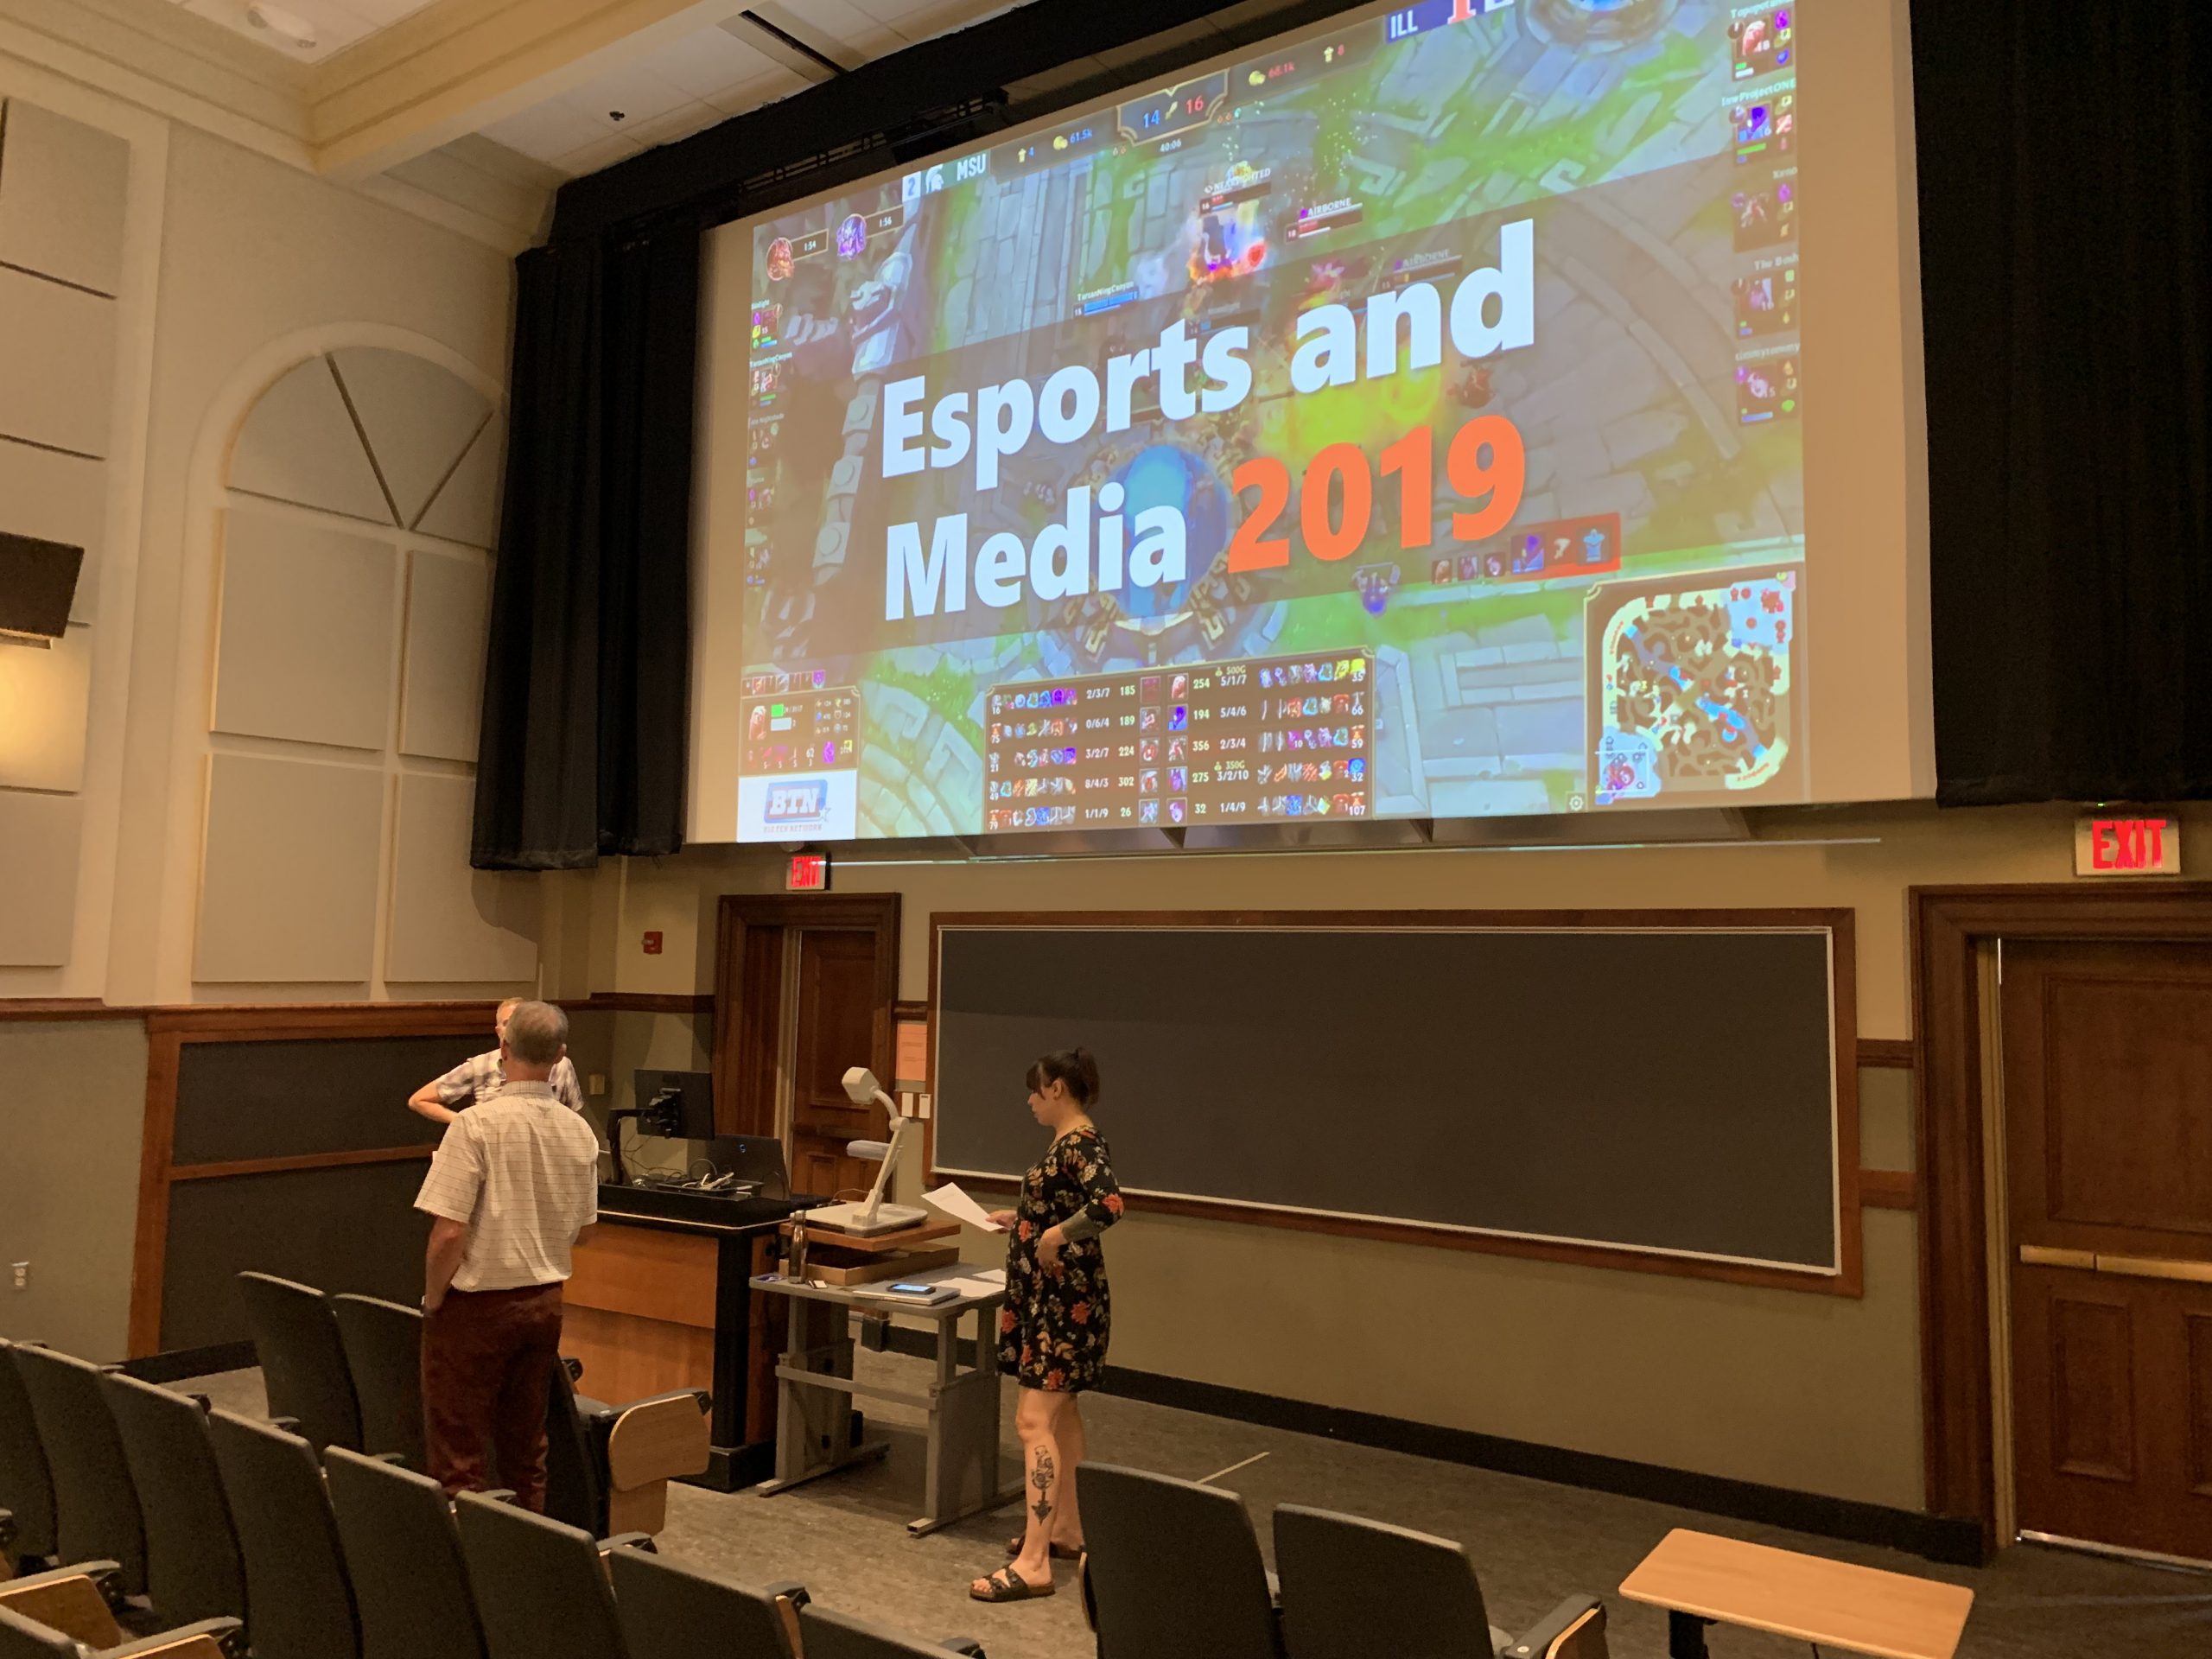 Esports and Media Camp 2019